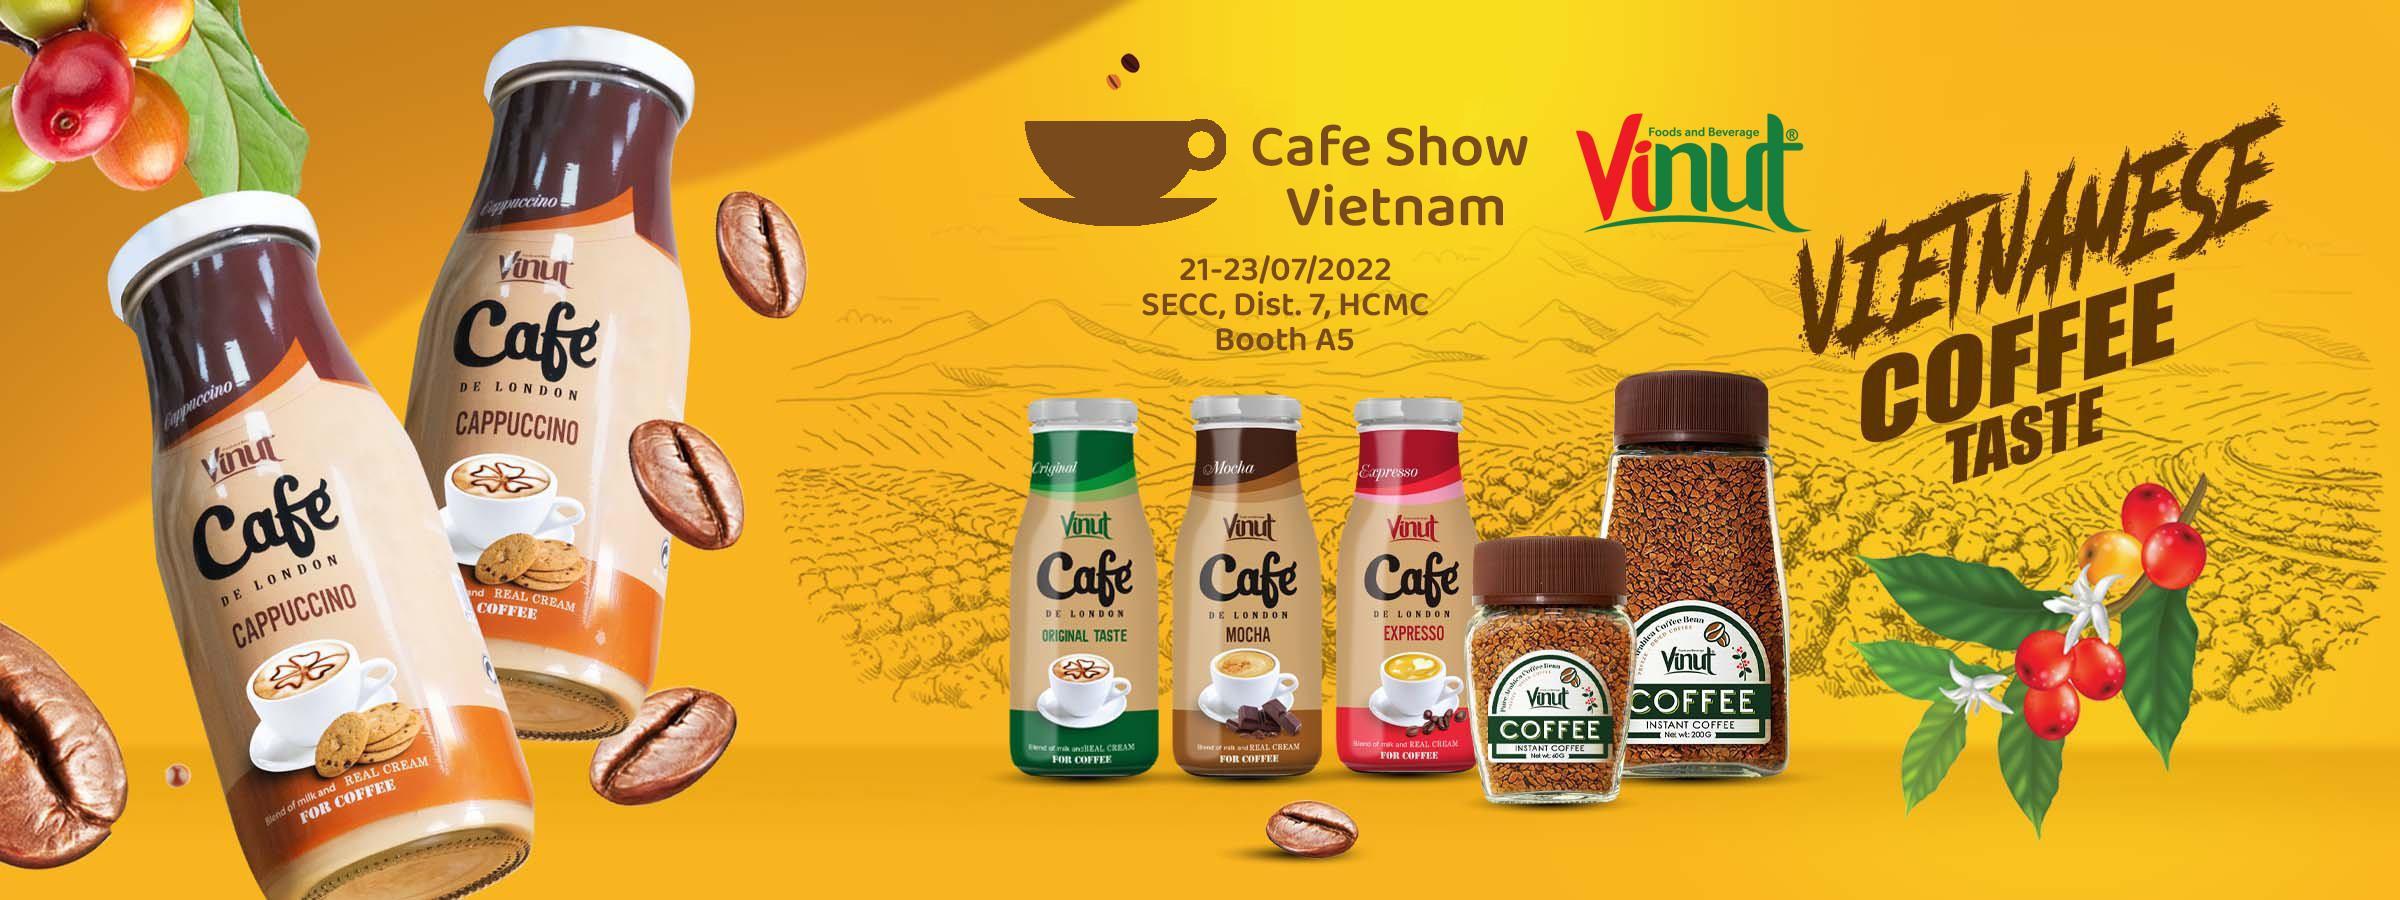 Vinut and Vietnam international Cafe Show 2022